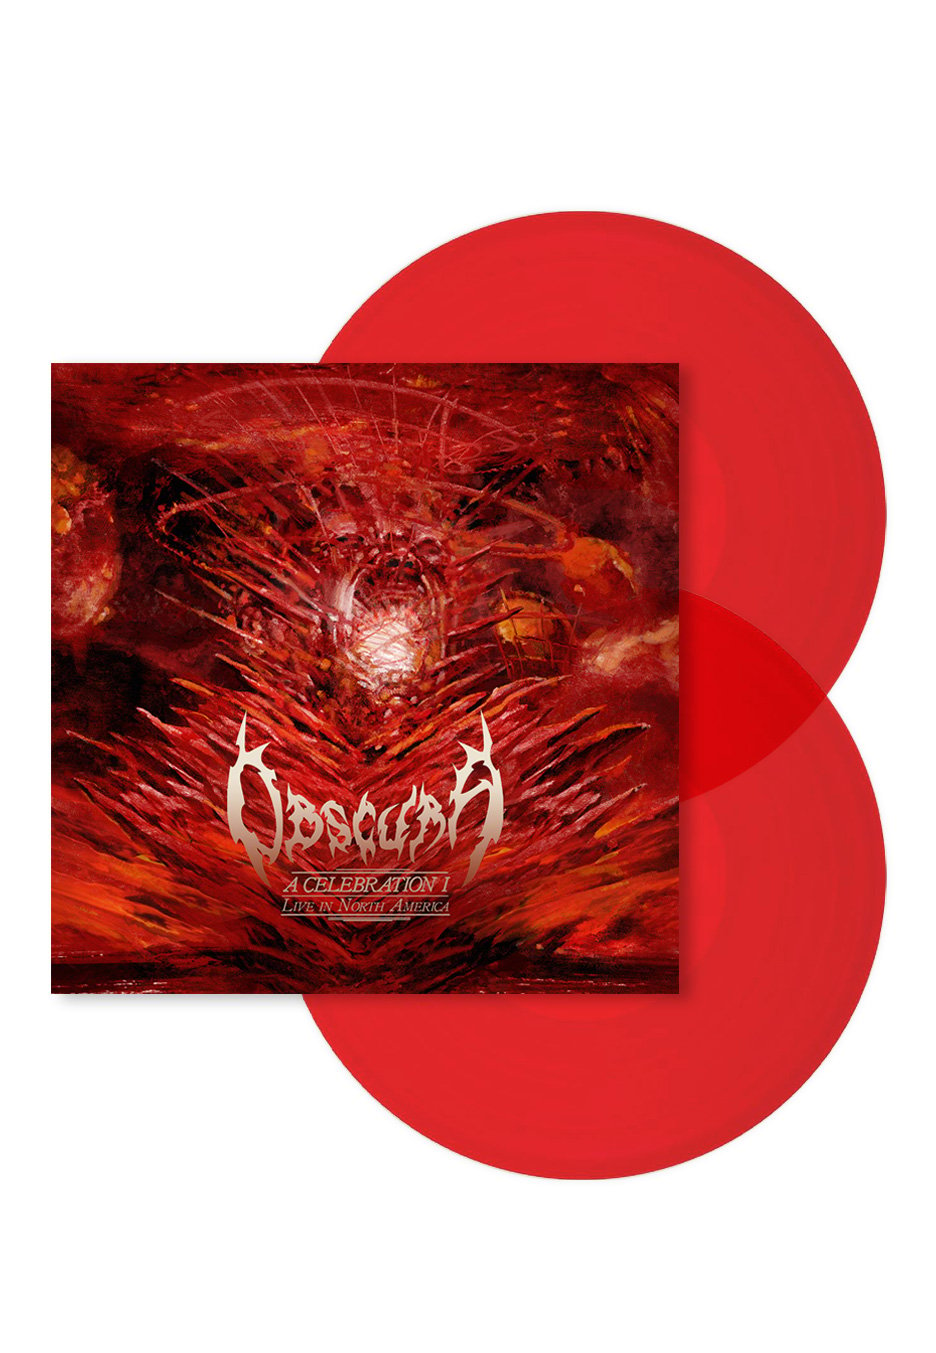 Obscura - A Celebration I (Live In North America) Ltd. Transparent Red - Colored 2 Vinyl